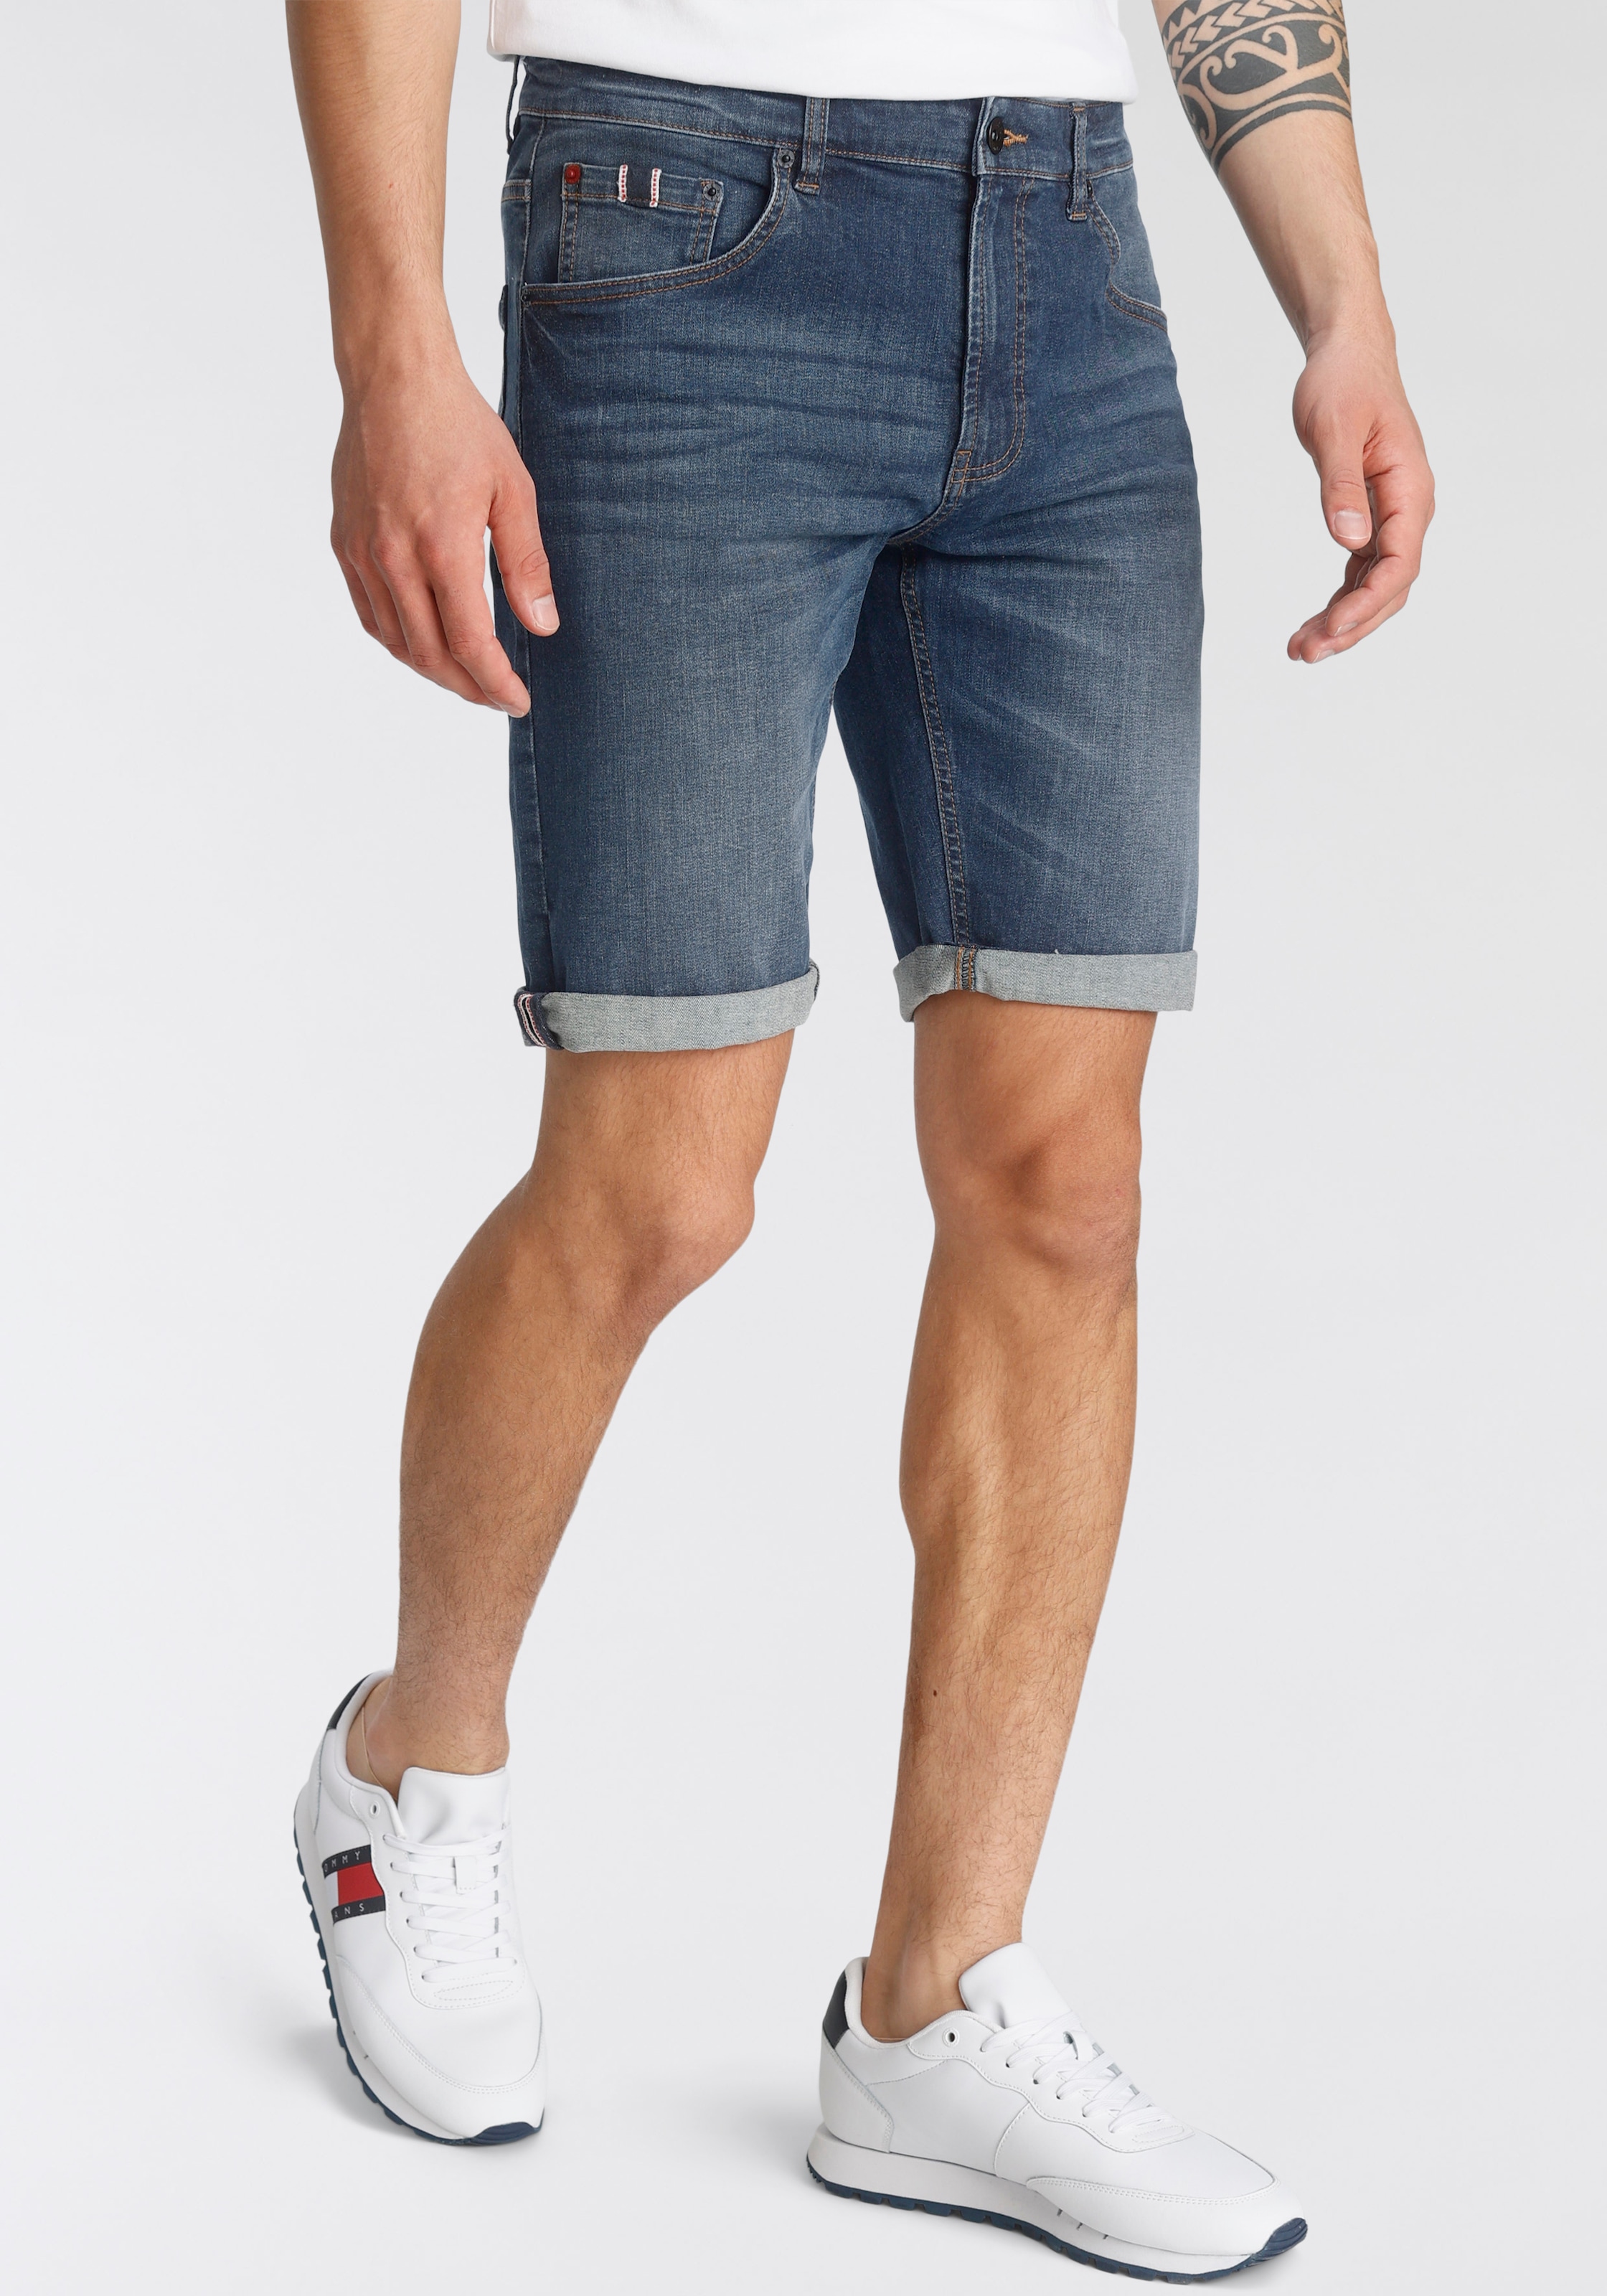 Modetrends Jeans aktuelle - jetzt Shorts shoppen online